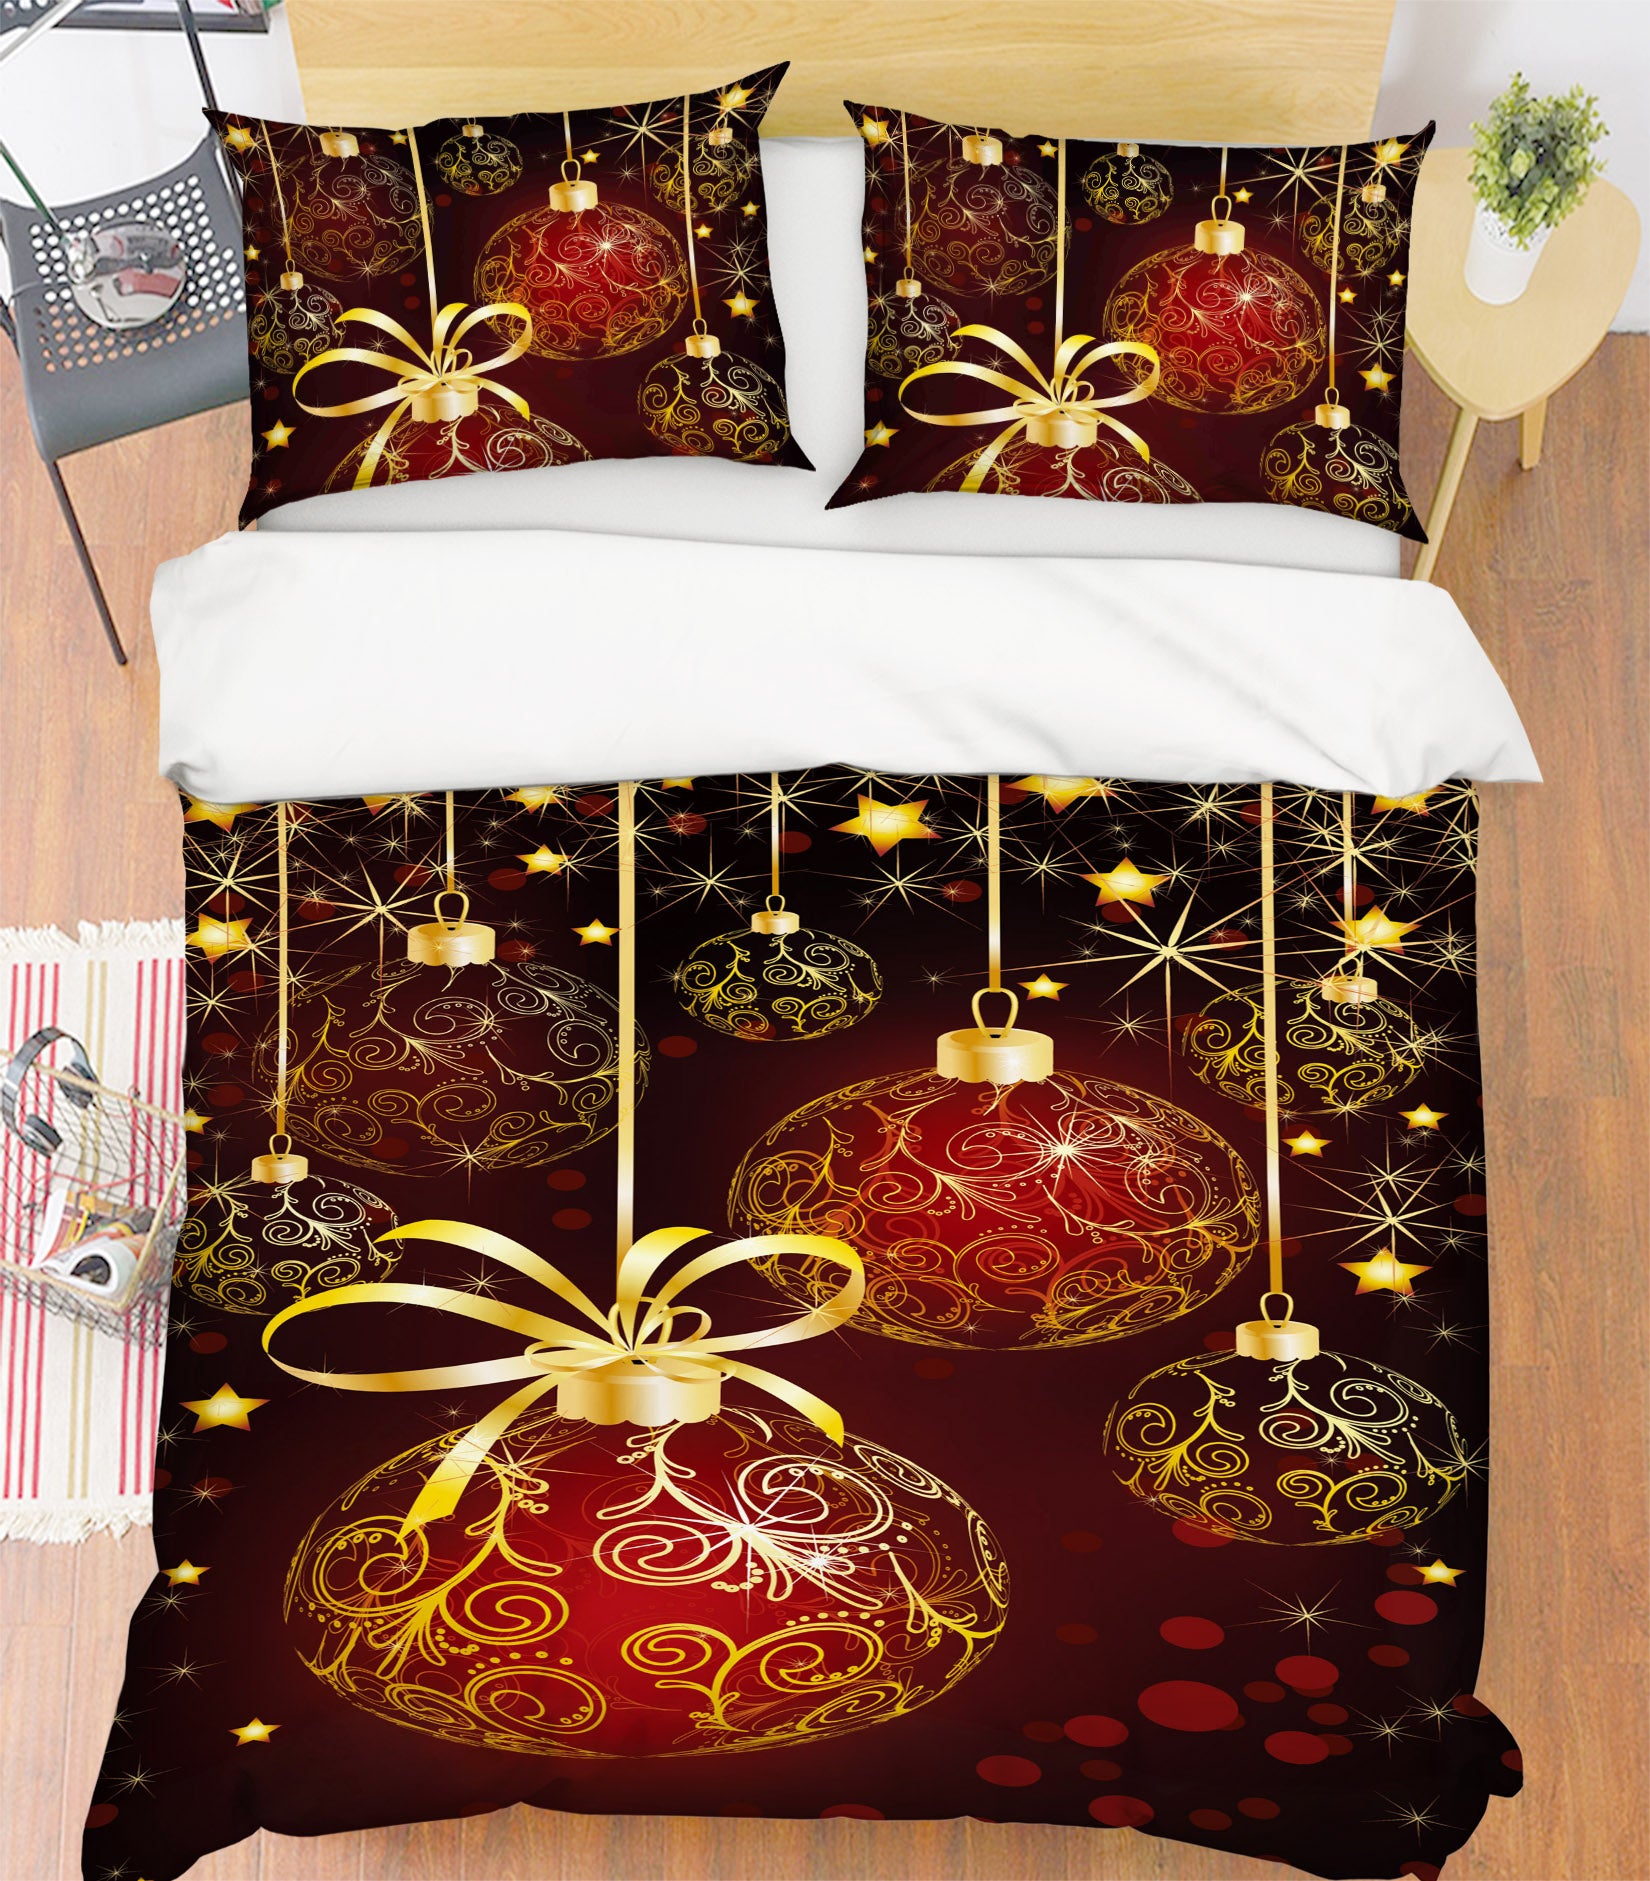 3D Ball Pendant 52219 Christmas Quilt Duvet Cover Xmas Bed Pillowcases